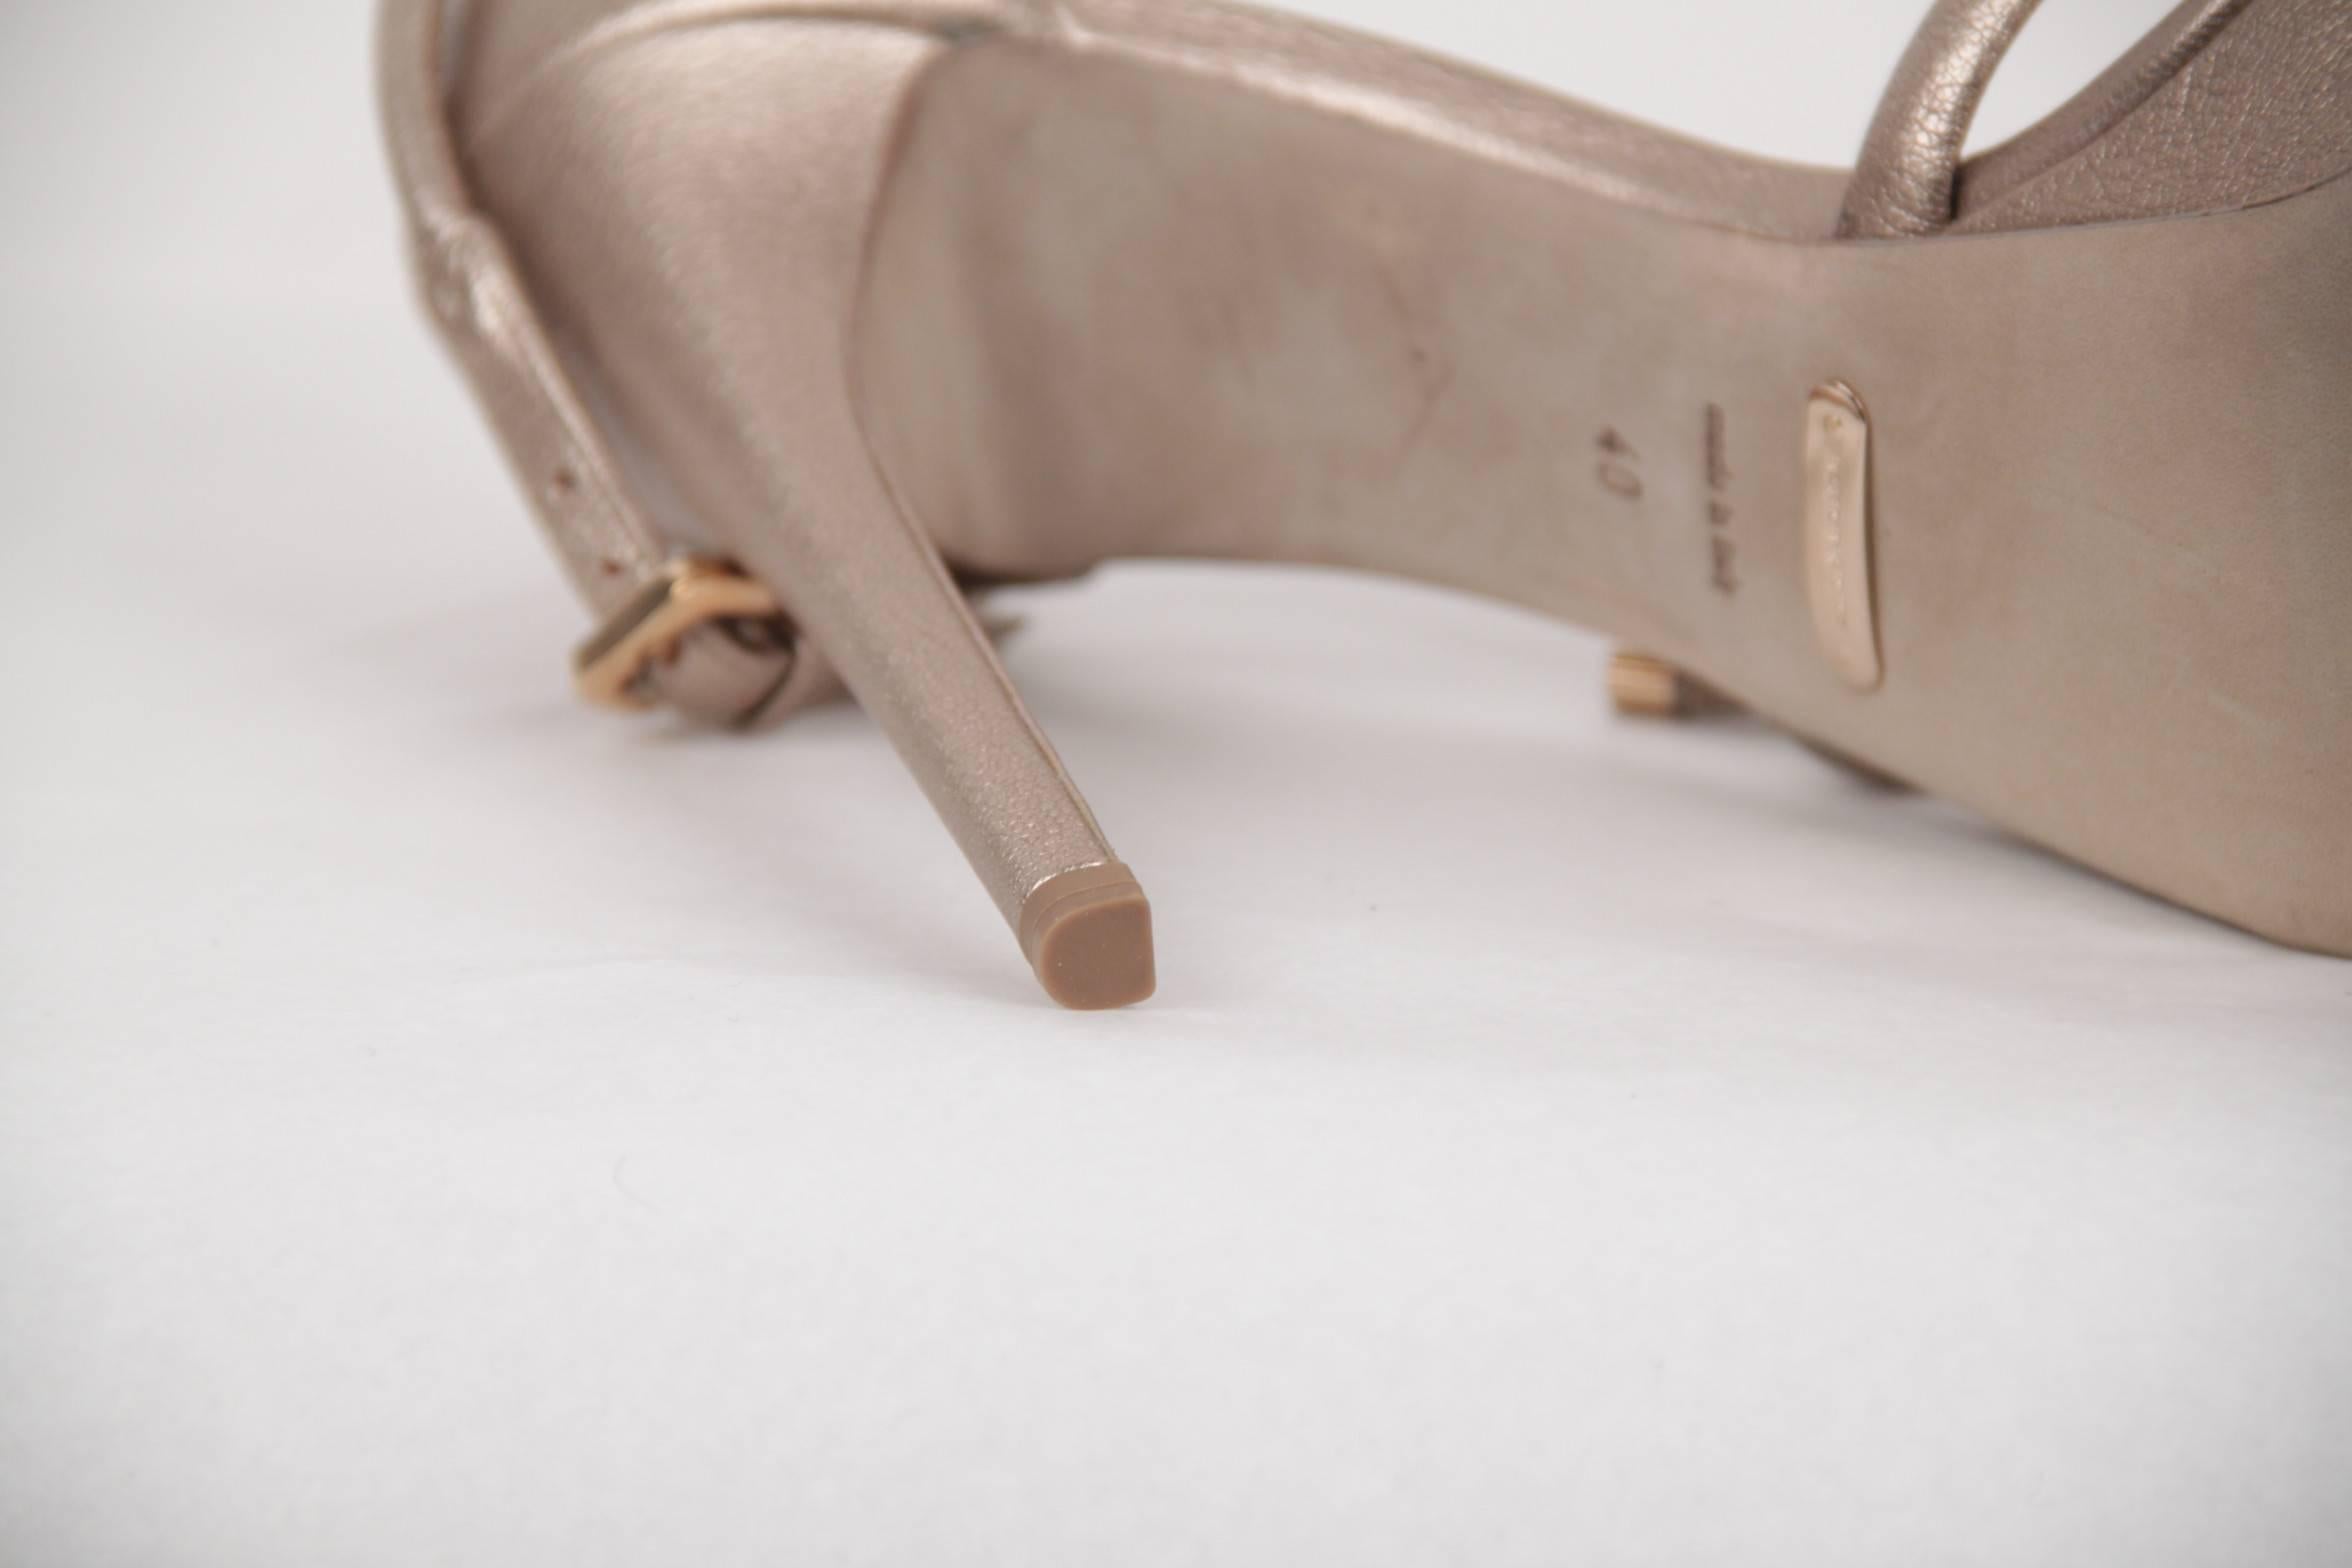 BURBERRY Golden Leather PLATFORM Reigate SANDALS Heels SHOES SZ 40  3